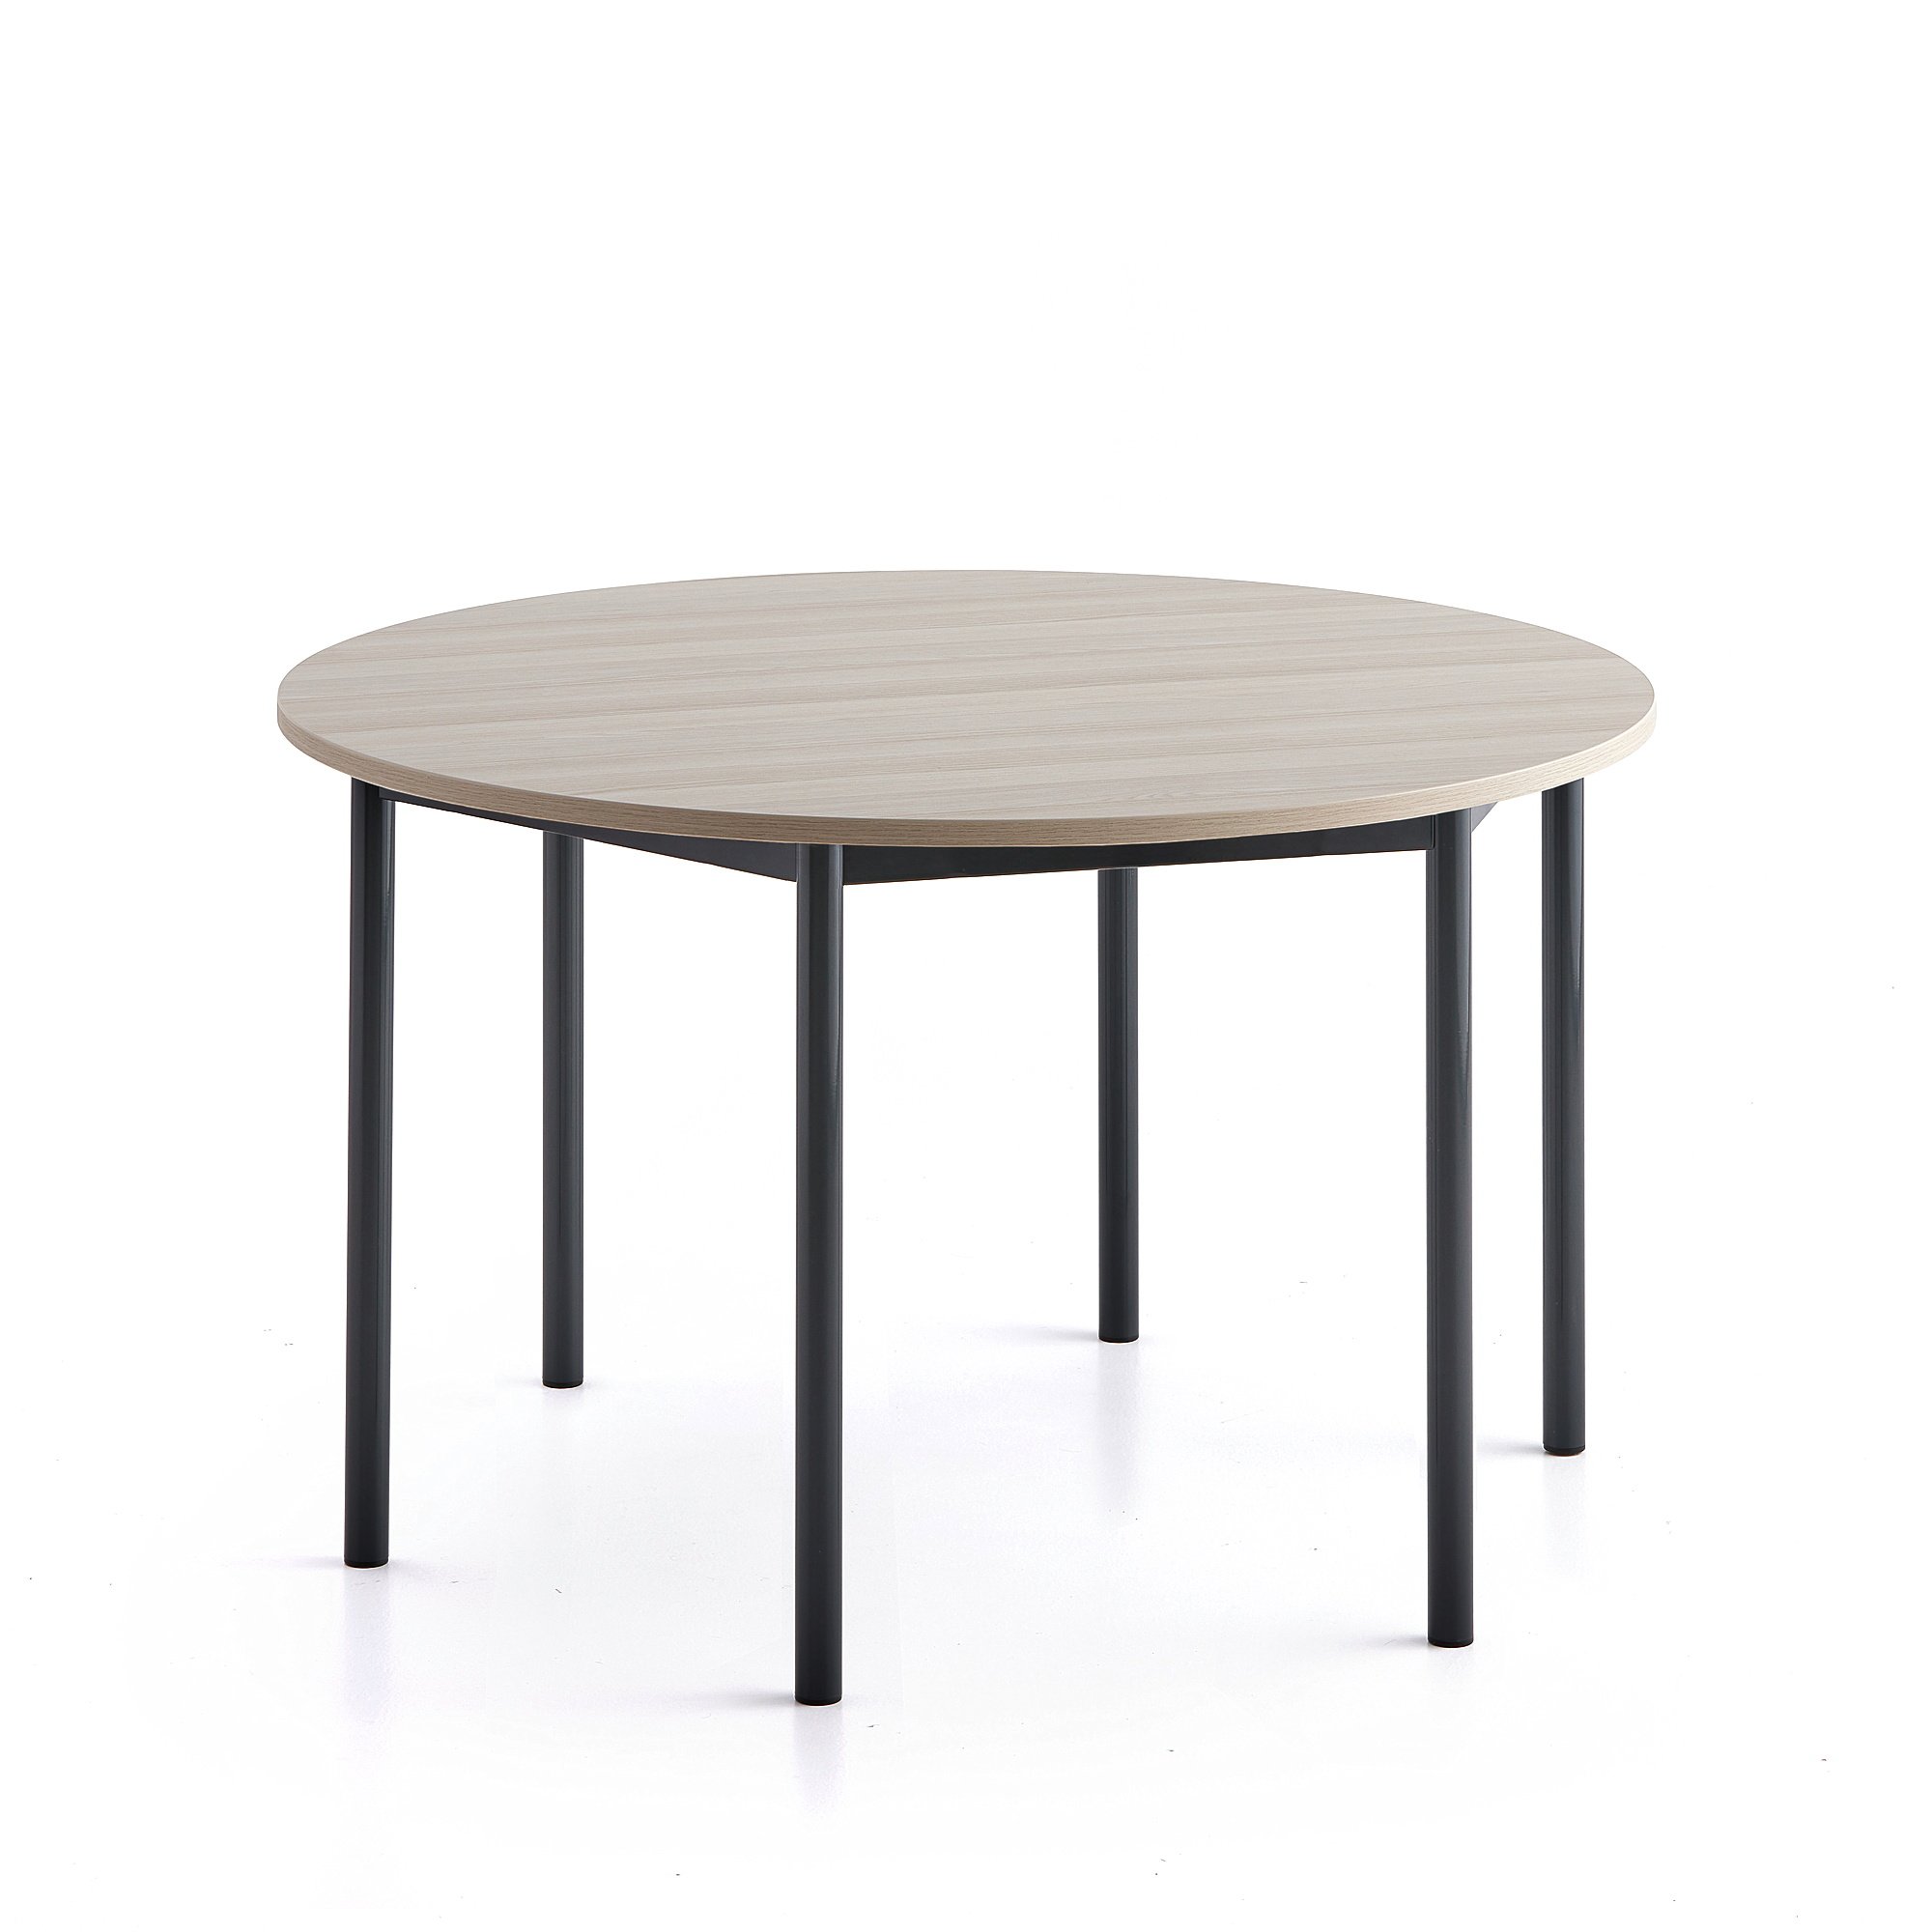 Stůl BORÅS PLUS, Ø1200x720 mm, antracitově šedé nohy, HPL deska, jasan